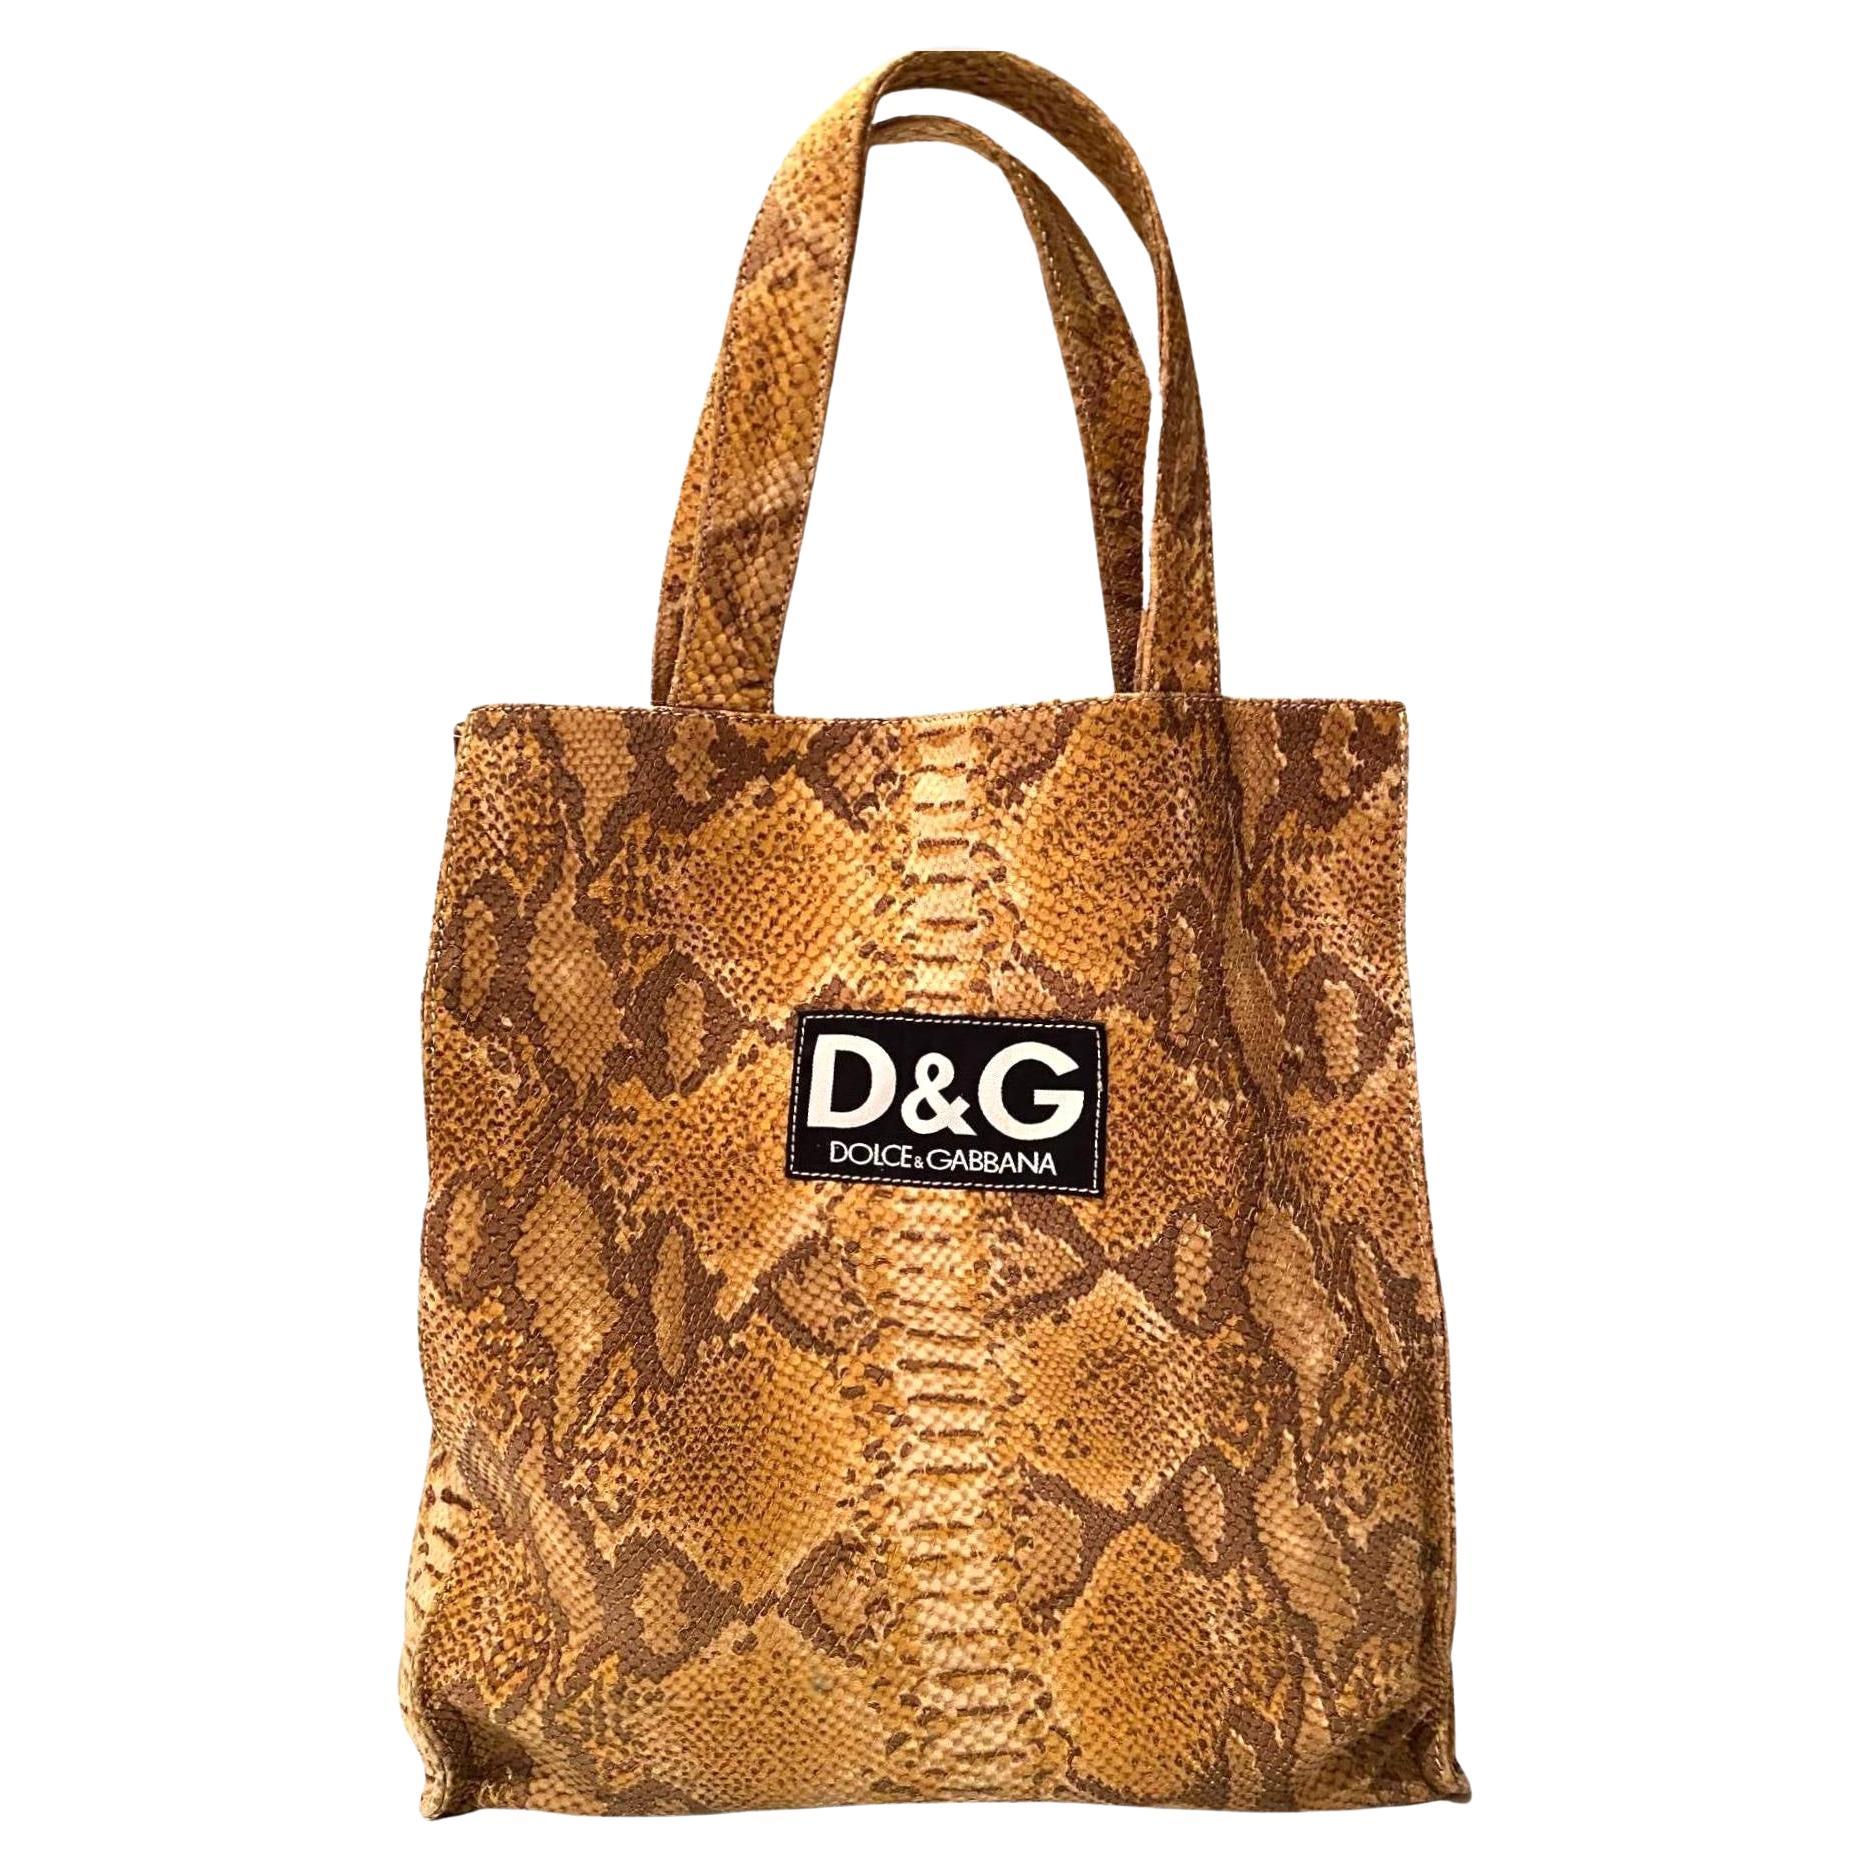 1990s D&G Dolce Gabbana Brown Leather Snake Print Shopper Tote Bag